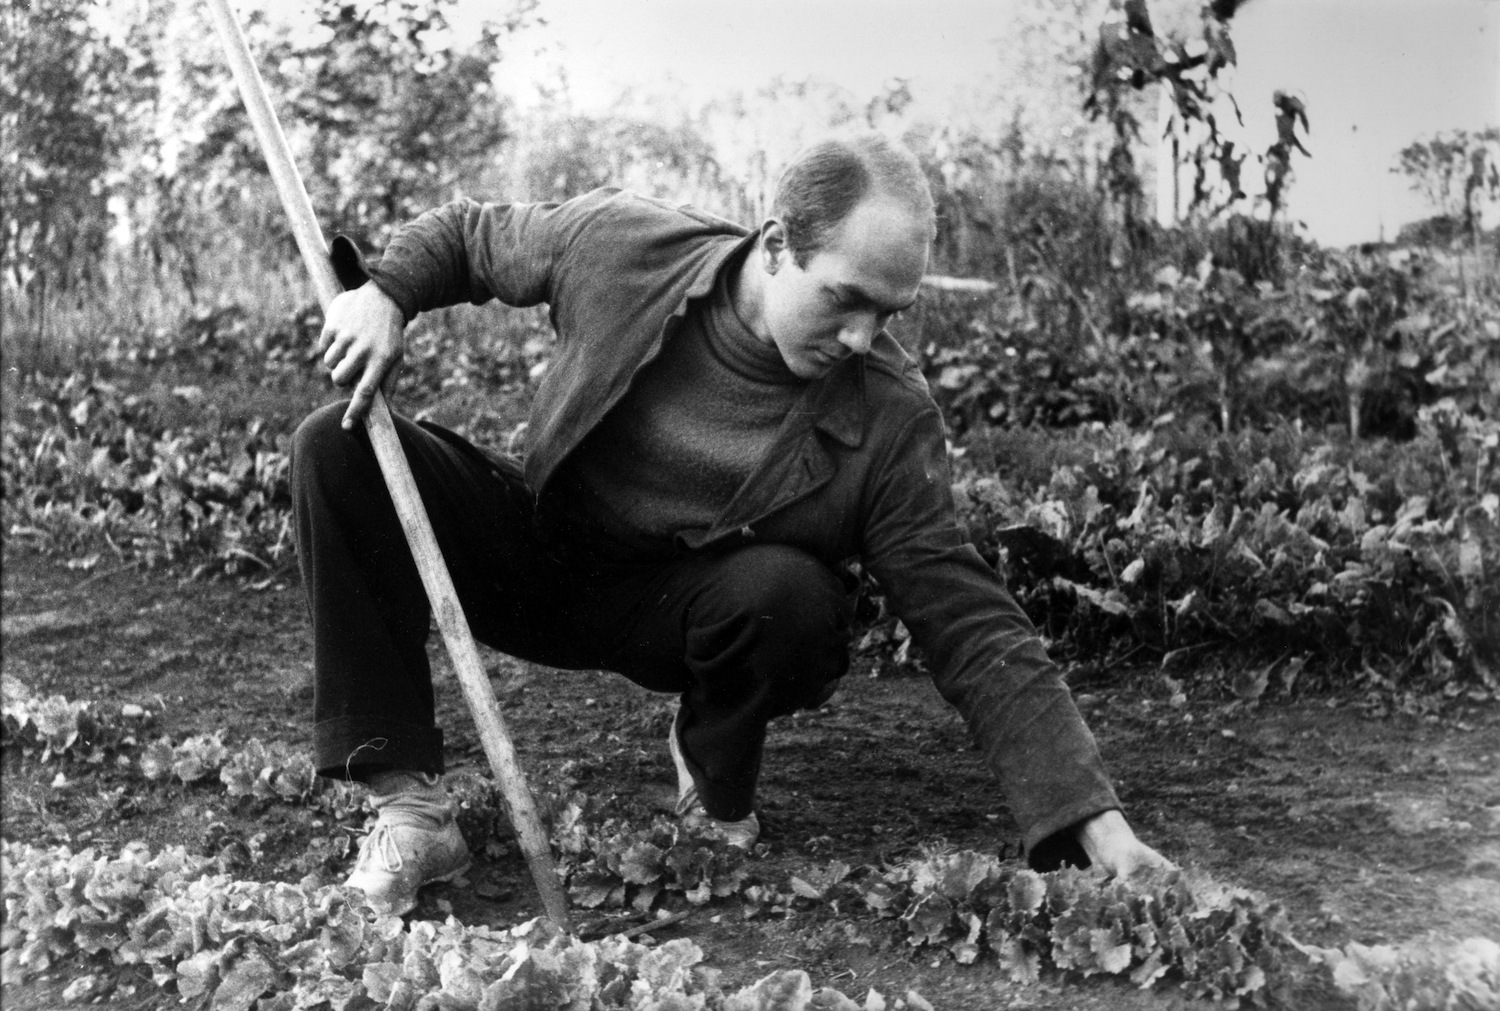 Fred Hearn; Richard Merrill 1936, courtesy of Jacob’s Pillow Archives “Dancer Fred Hearn tending to the garden